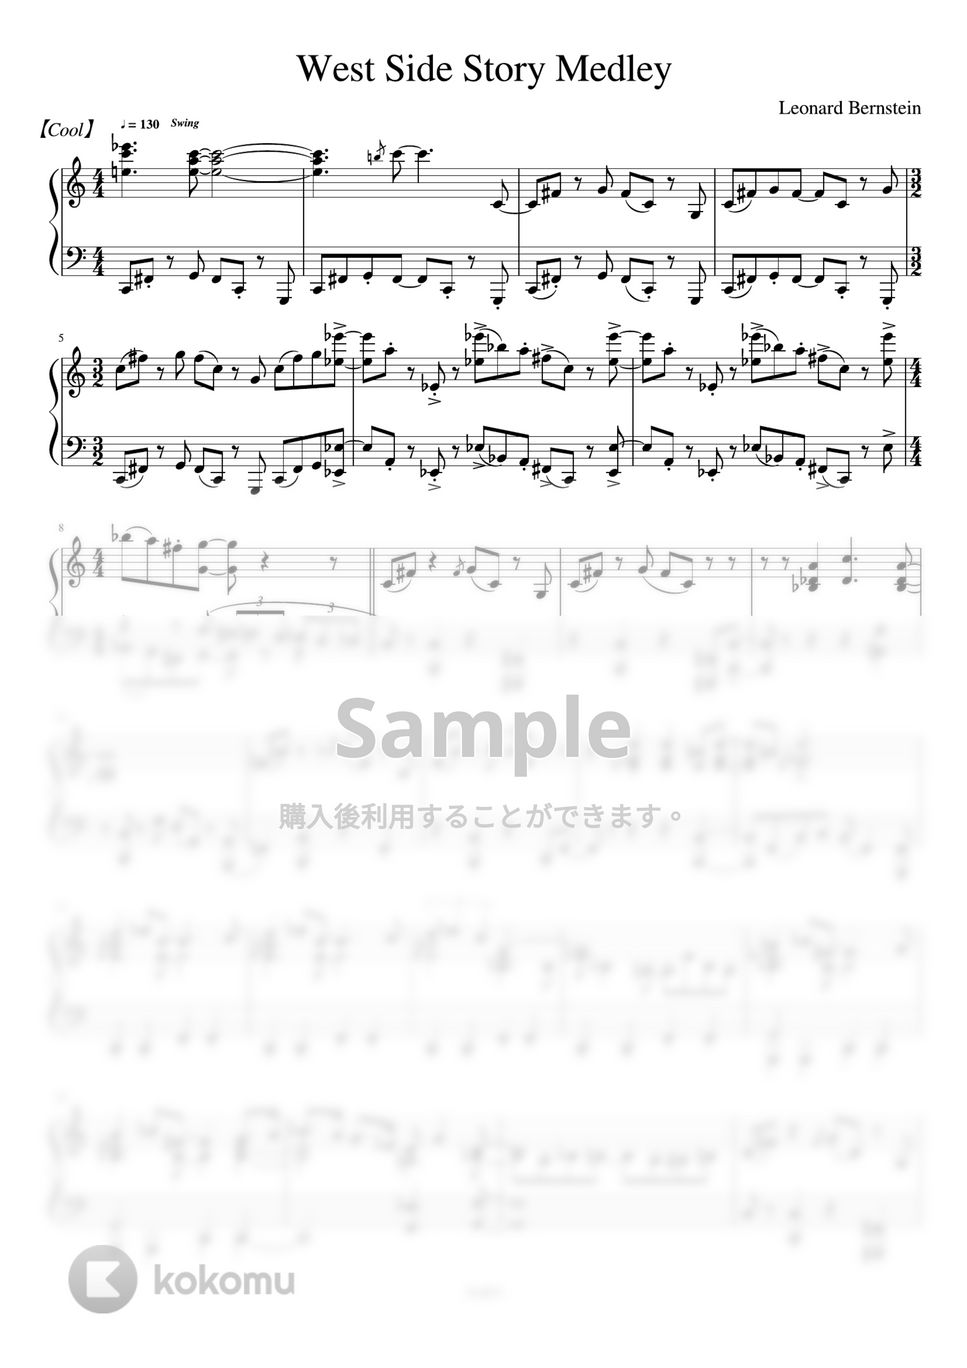 West Side Story - West Side Story Medley (ウエストサイドストーリーピアノ/映画音楽ピアノ) by AsukA818